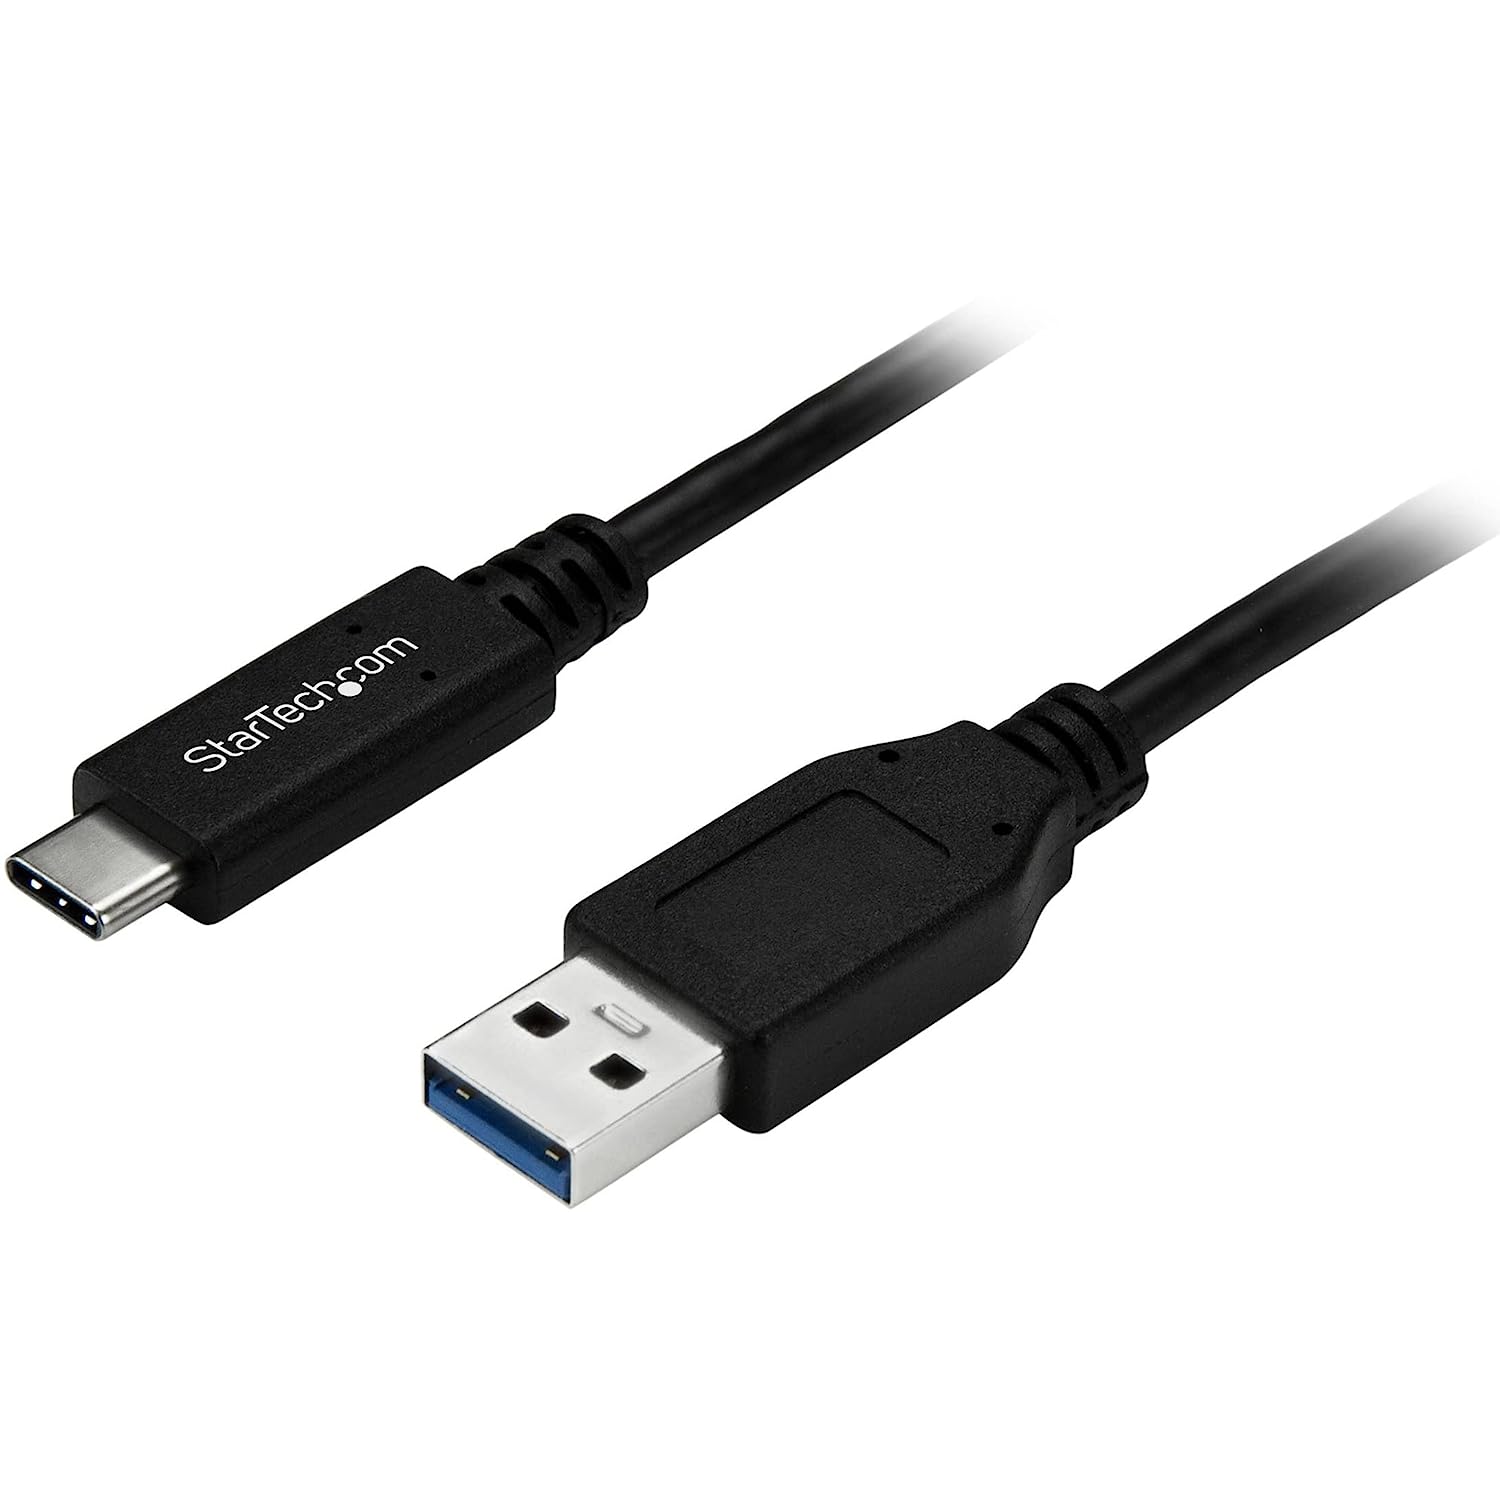 StarTech.com 1m / 3ft USB to USB C Cable - M/M - USB 3.0 - USB A to USB C